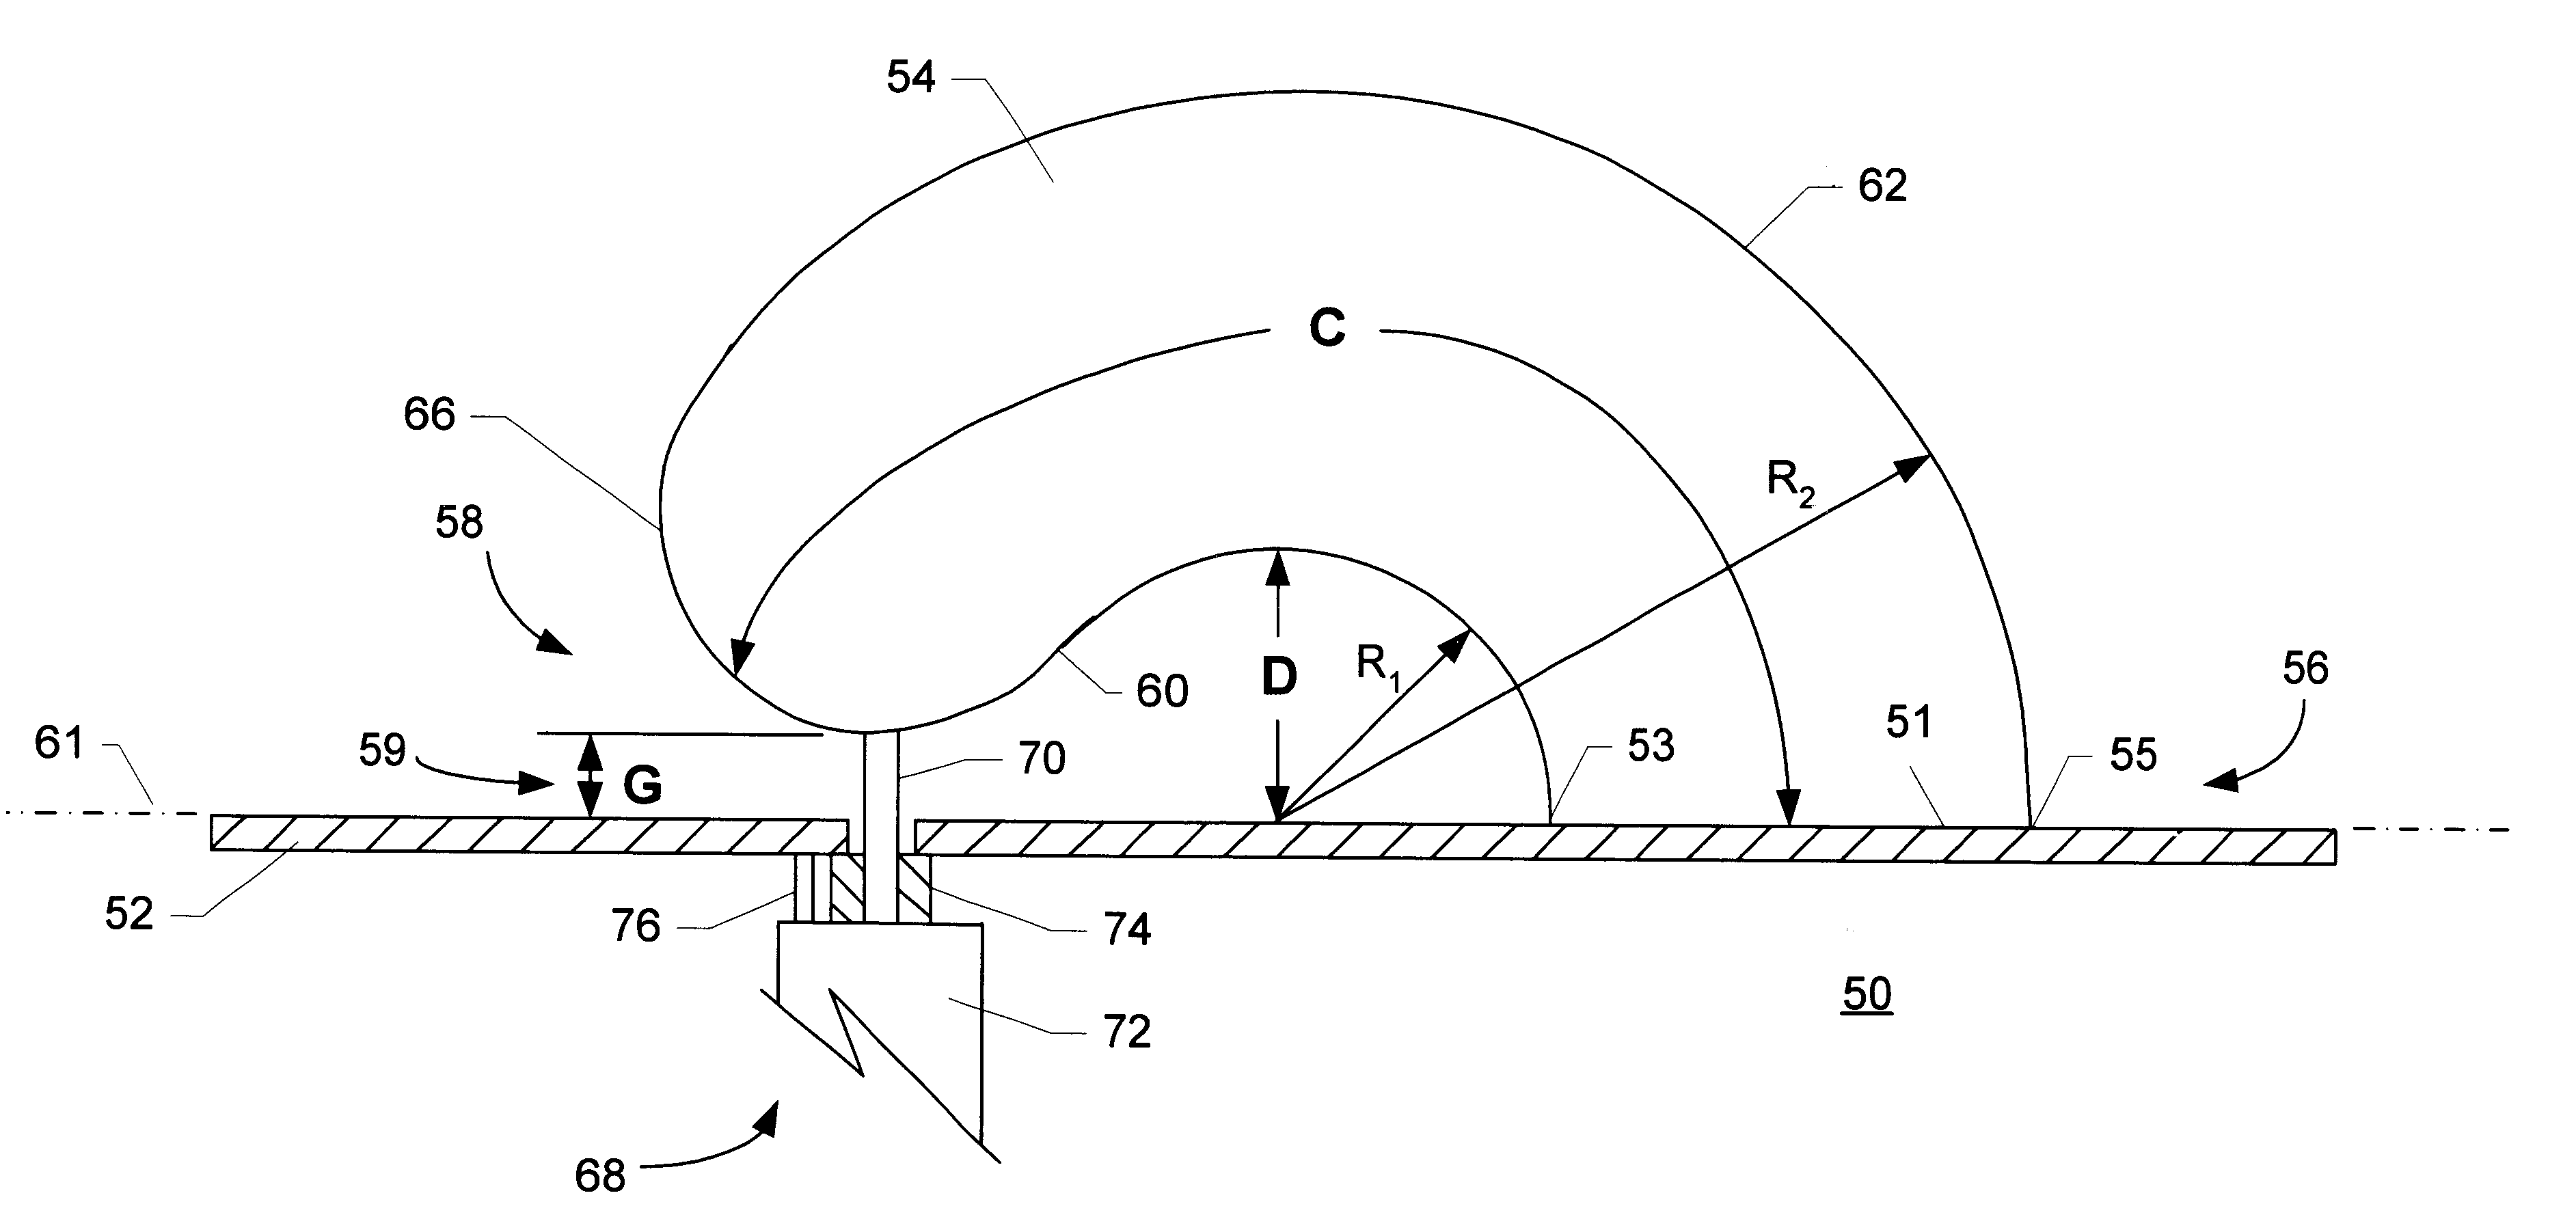 Single element antenna apparatus